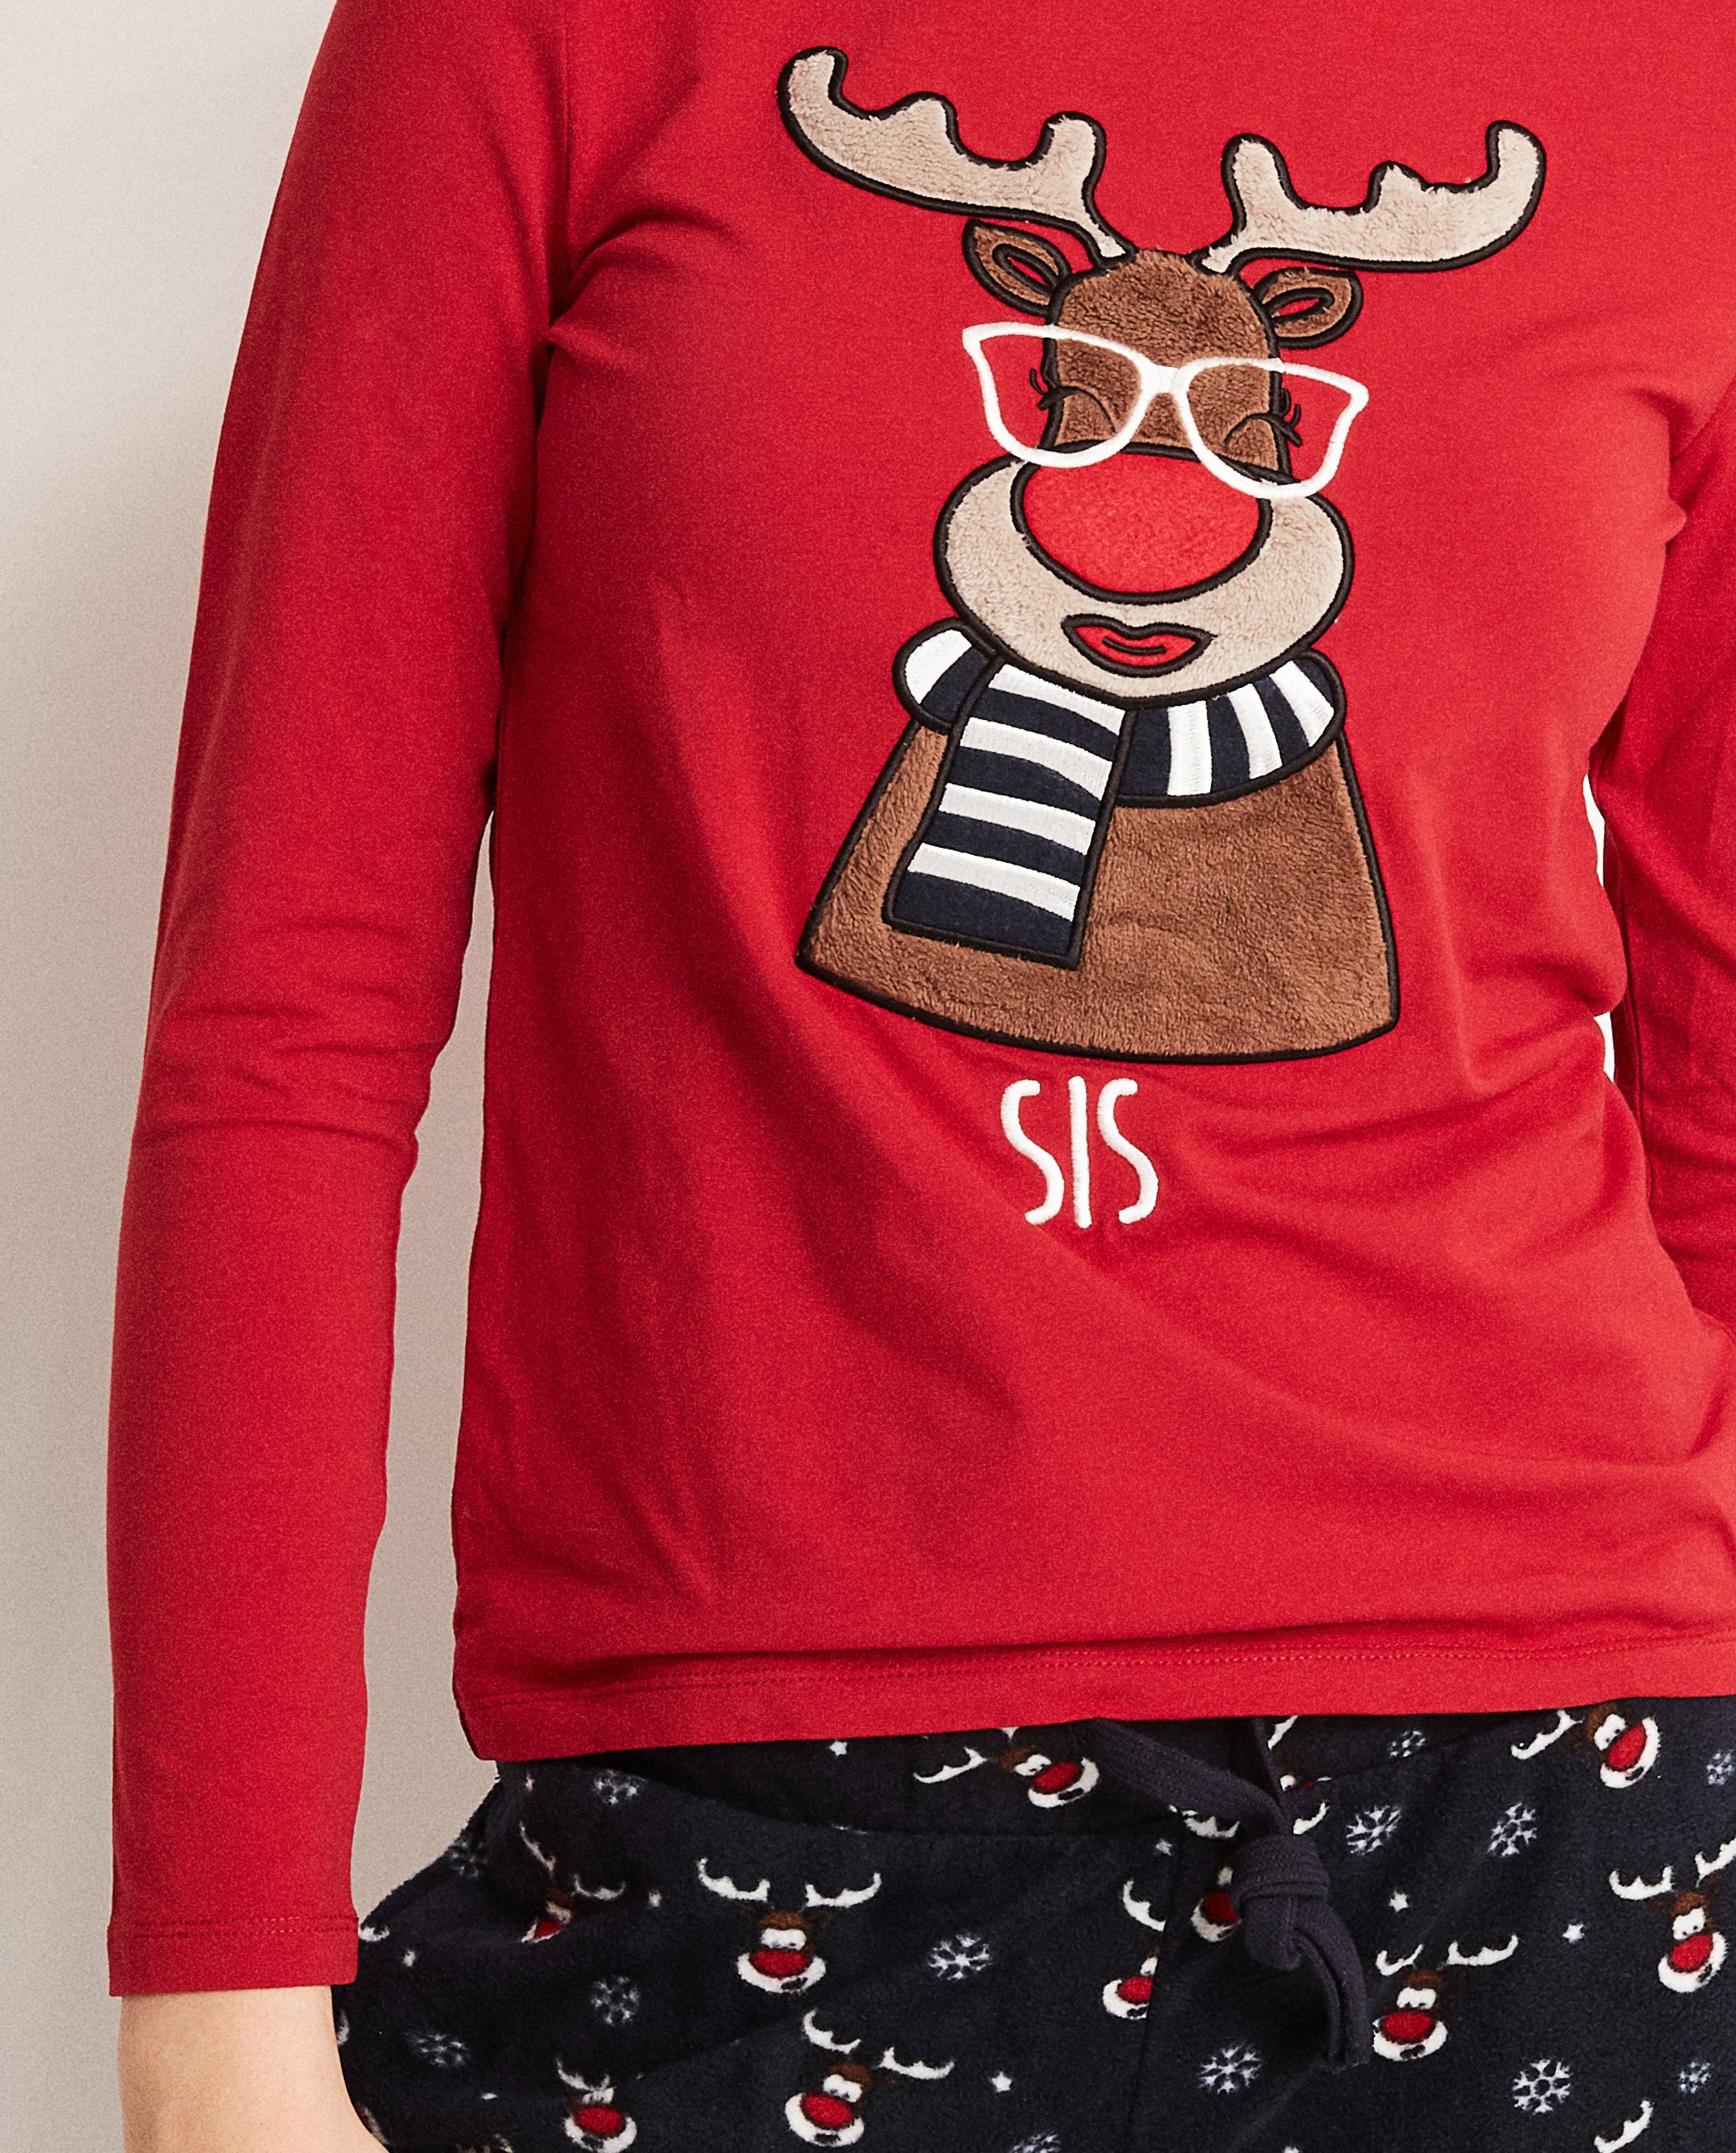 Nachtkleding - Pyjama kerstmis 'SIS'